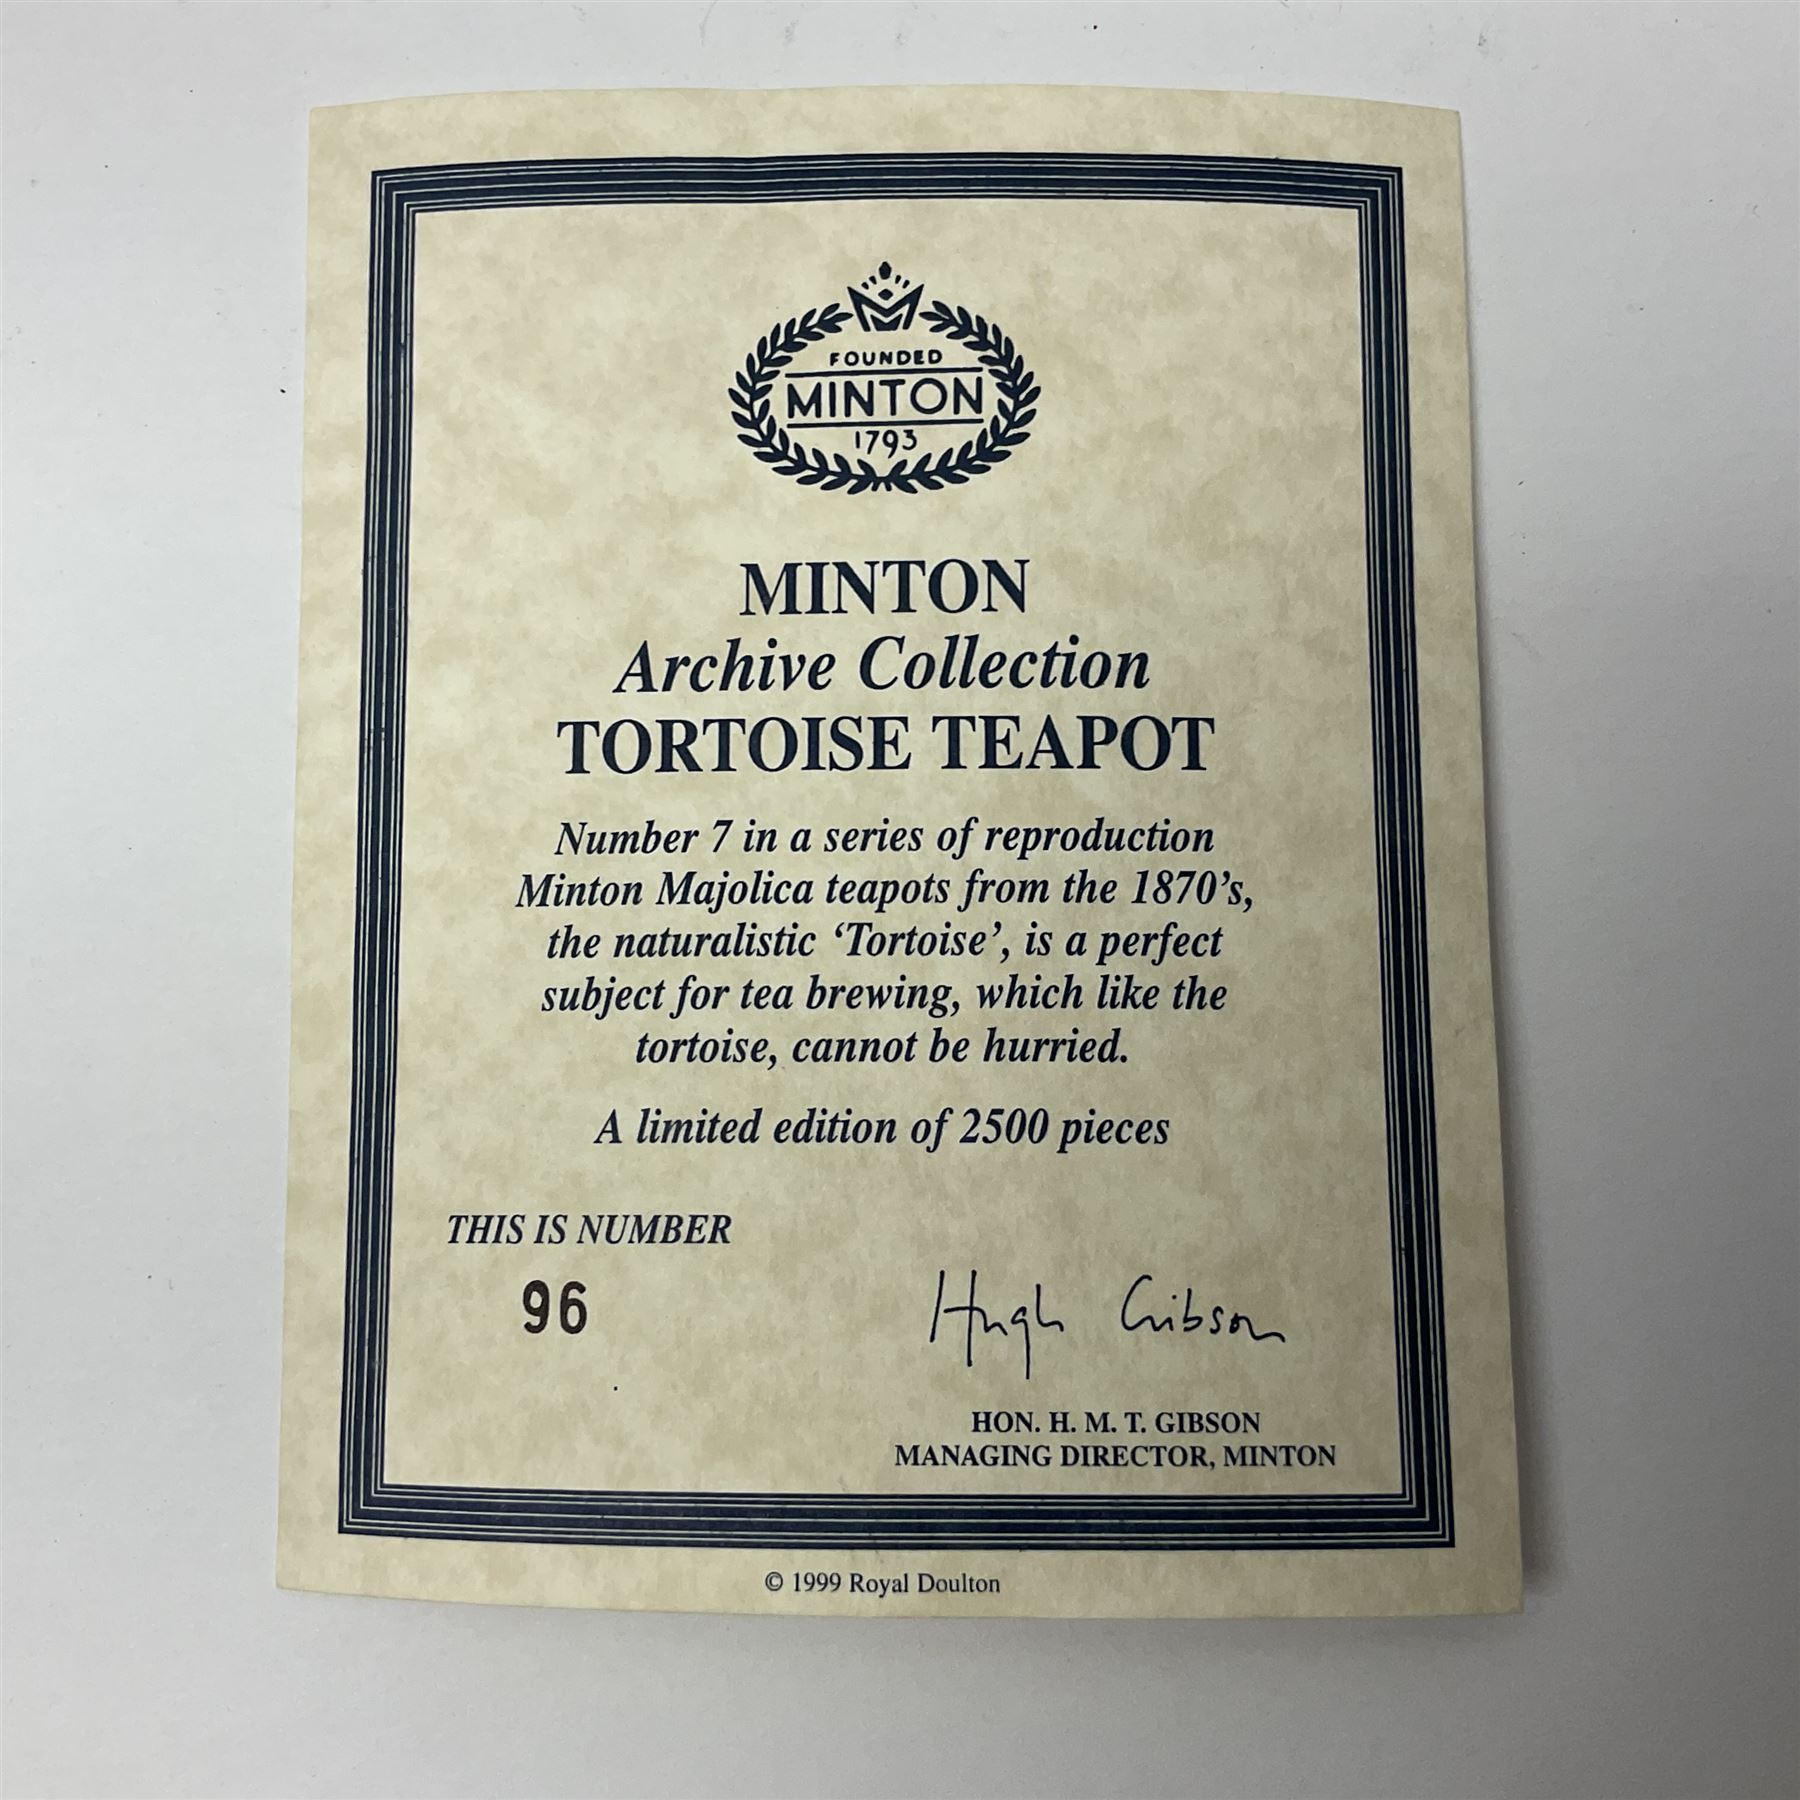 Minton Archive collection tortoise teapot - Image 11 of 14